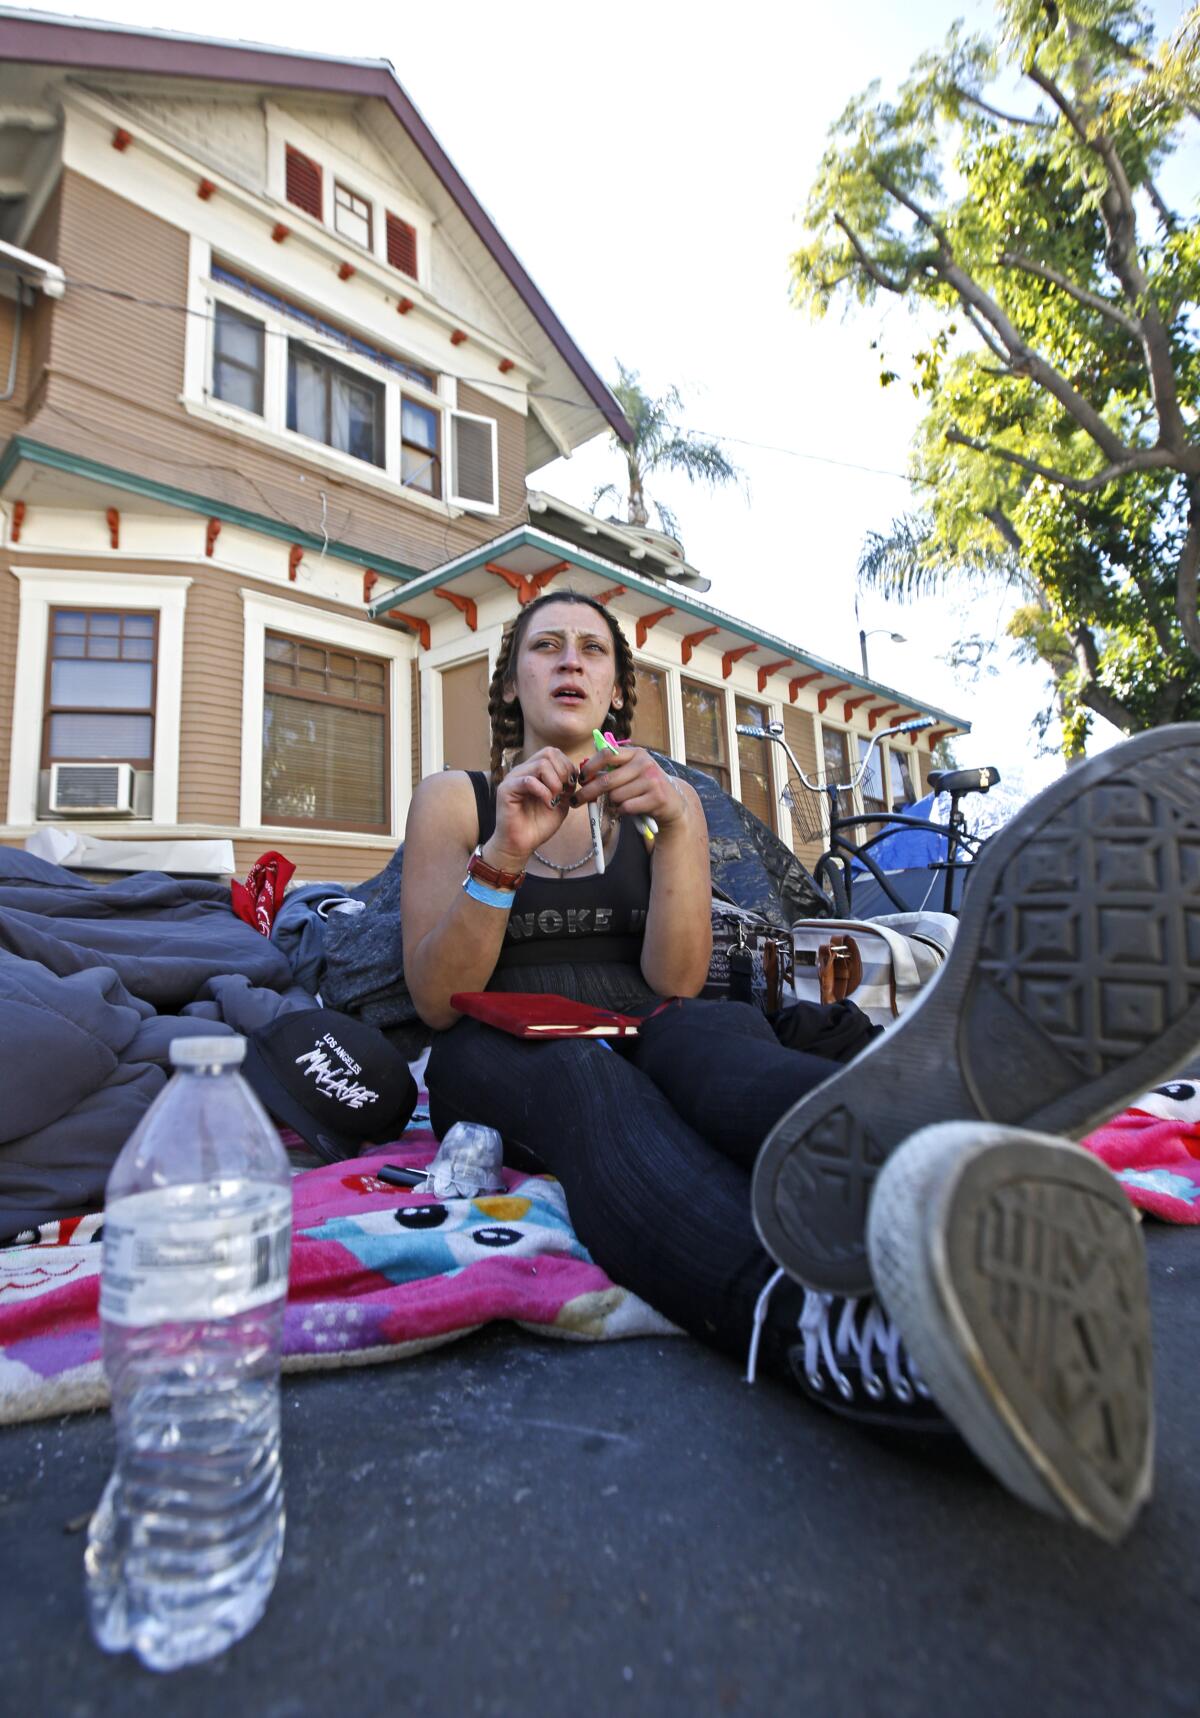 Victoriyah Ewing, 22 of Santa Ana, says she has been homeless for several years.